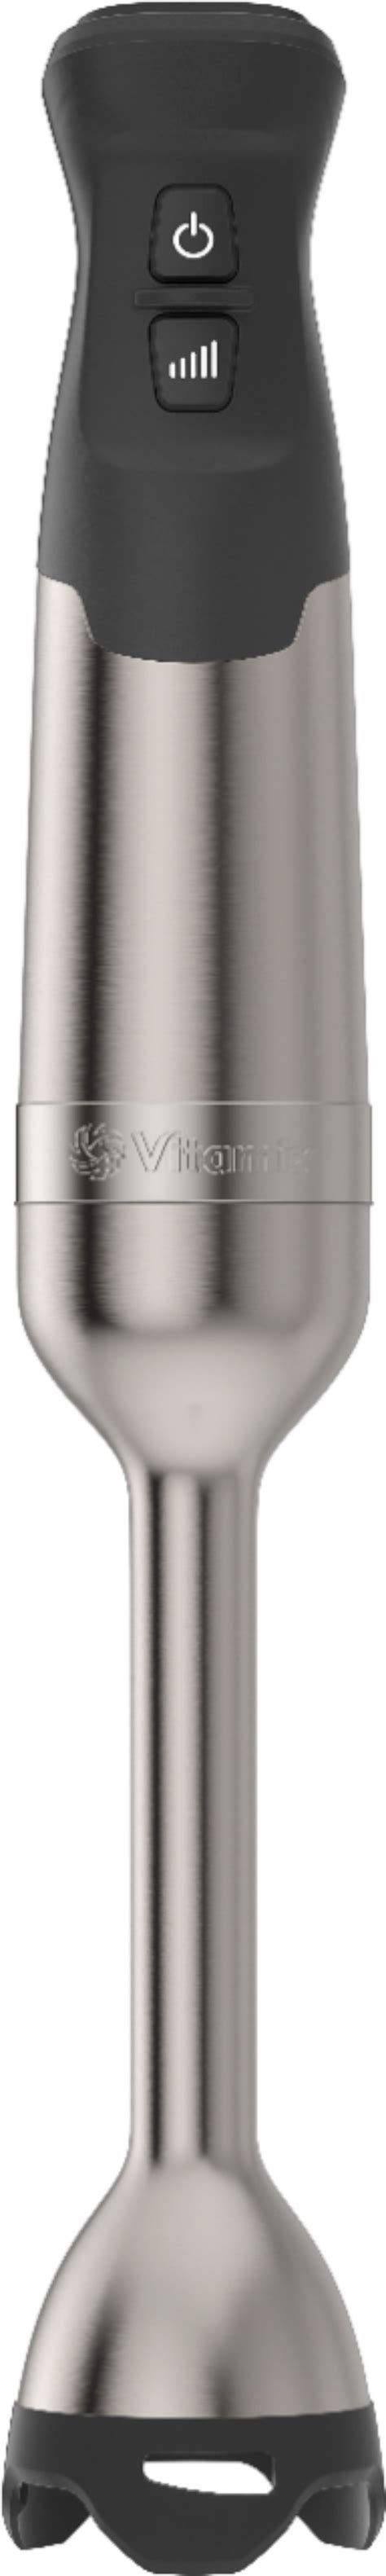 Customer Reviews Vitamix Immersion Blender Stainless Steel 067991